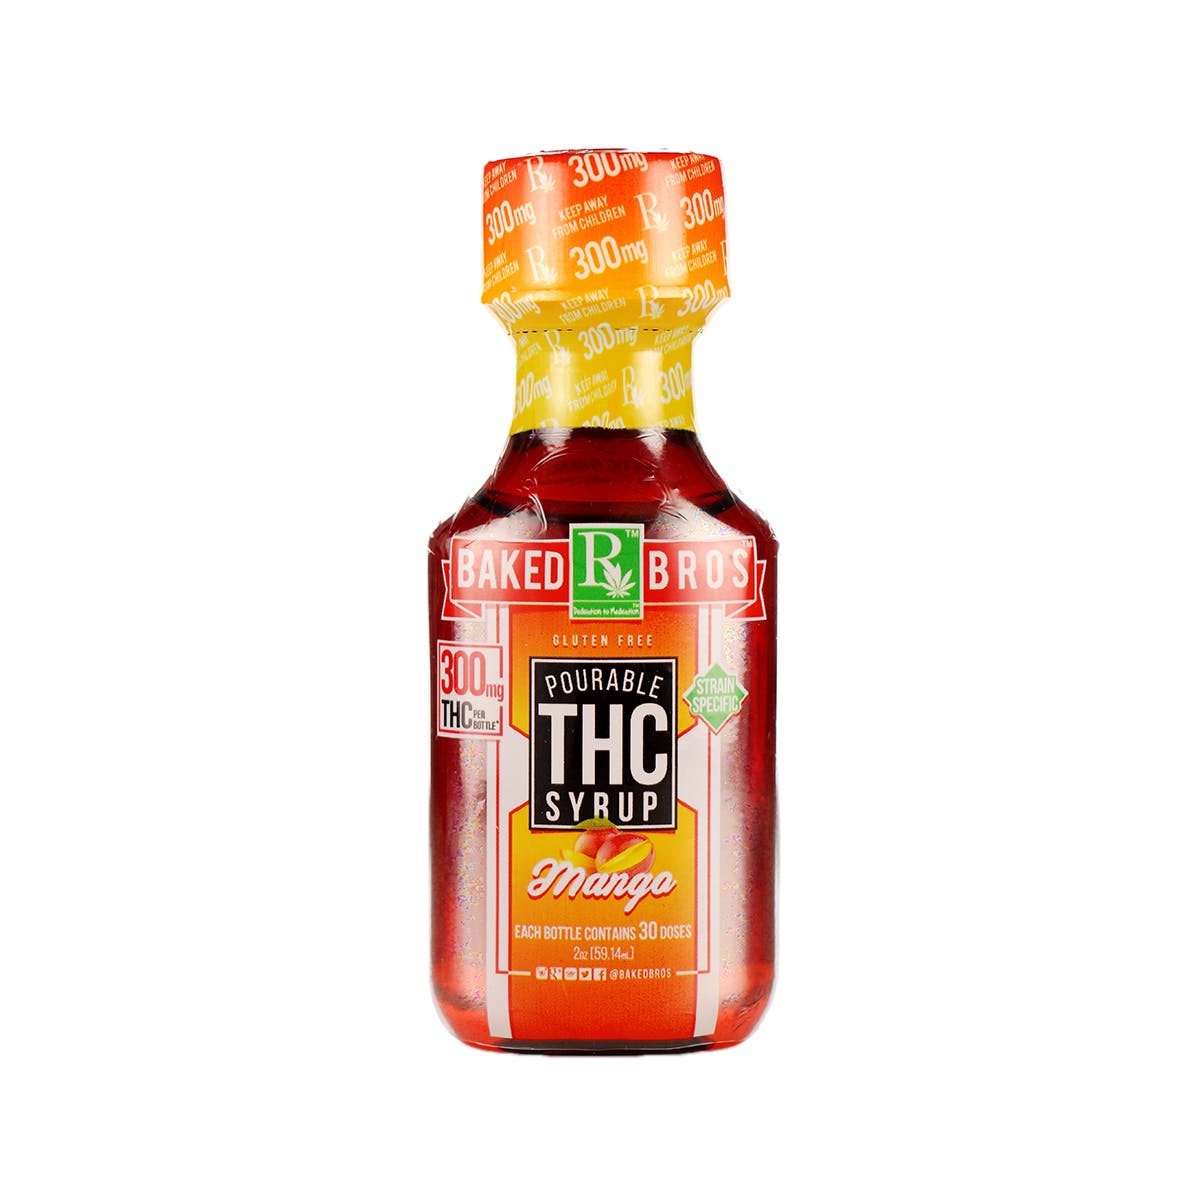 THC Syrup Mango 300mg